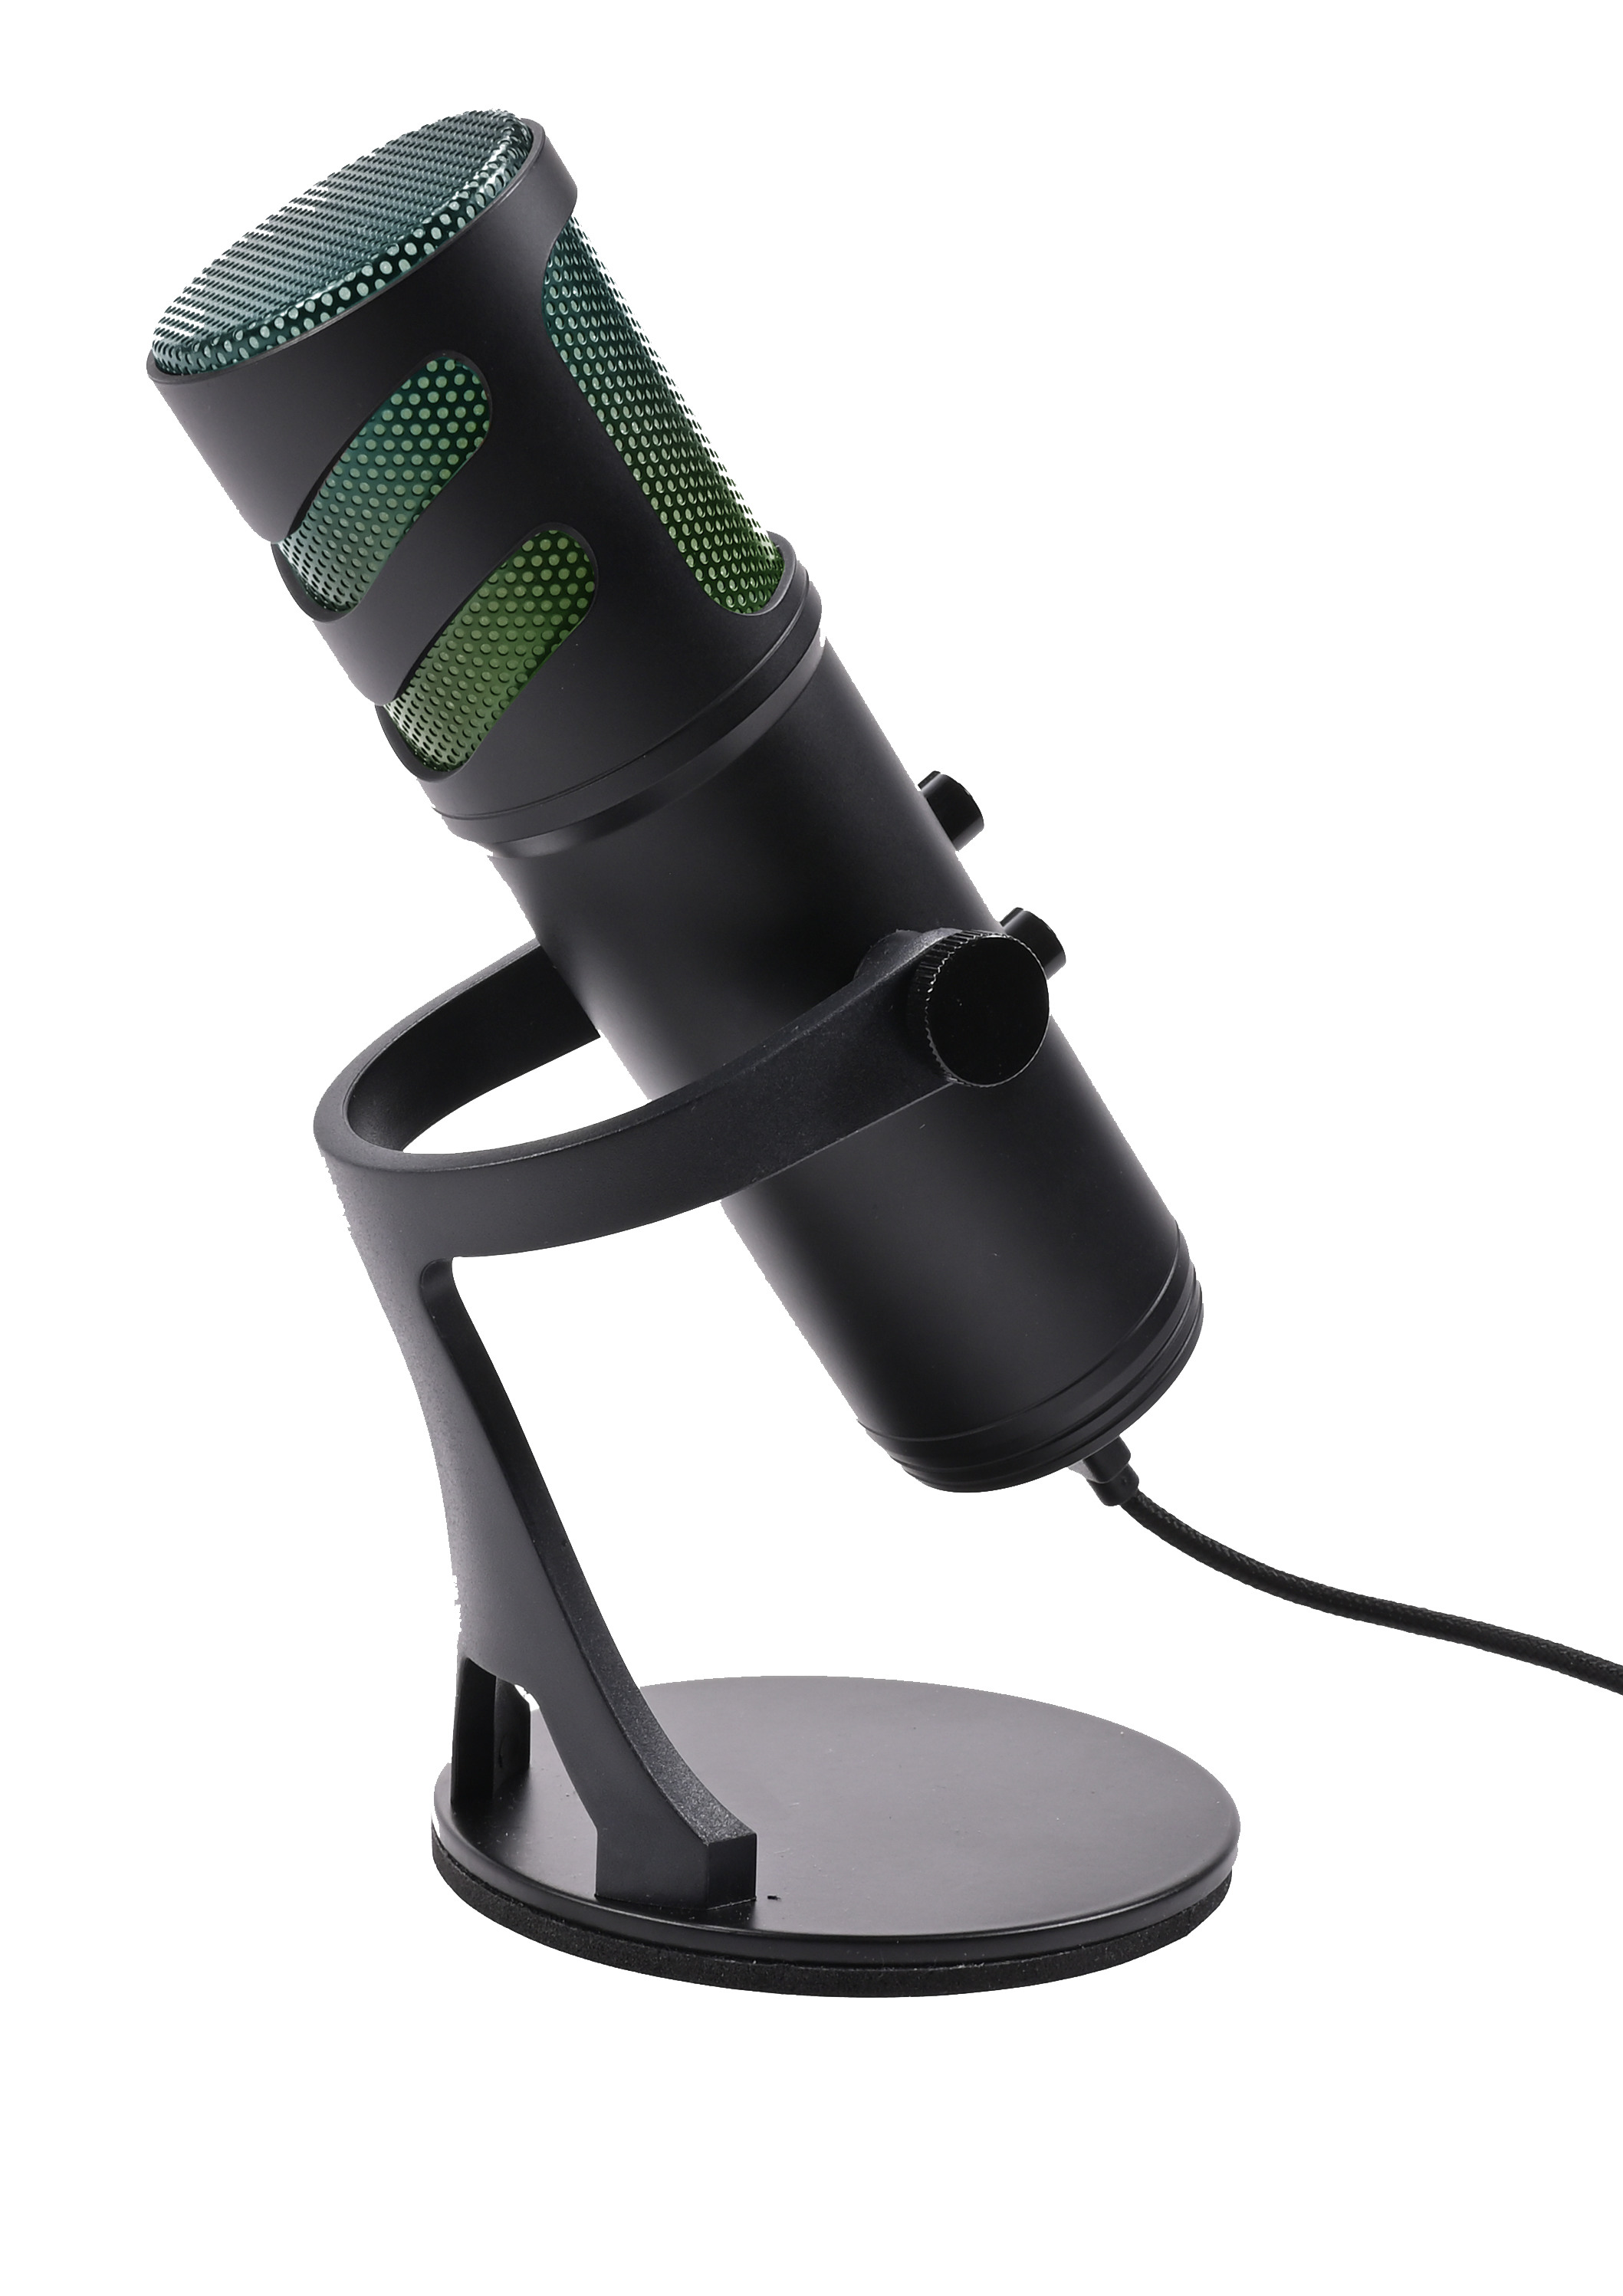 DELTACO RGB Microphone GAM-171 Black